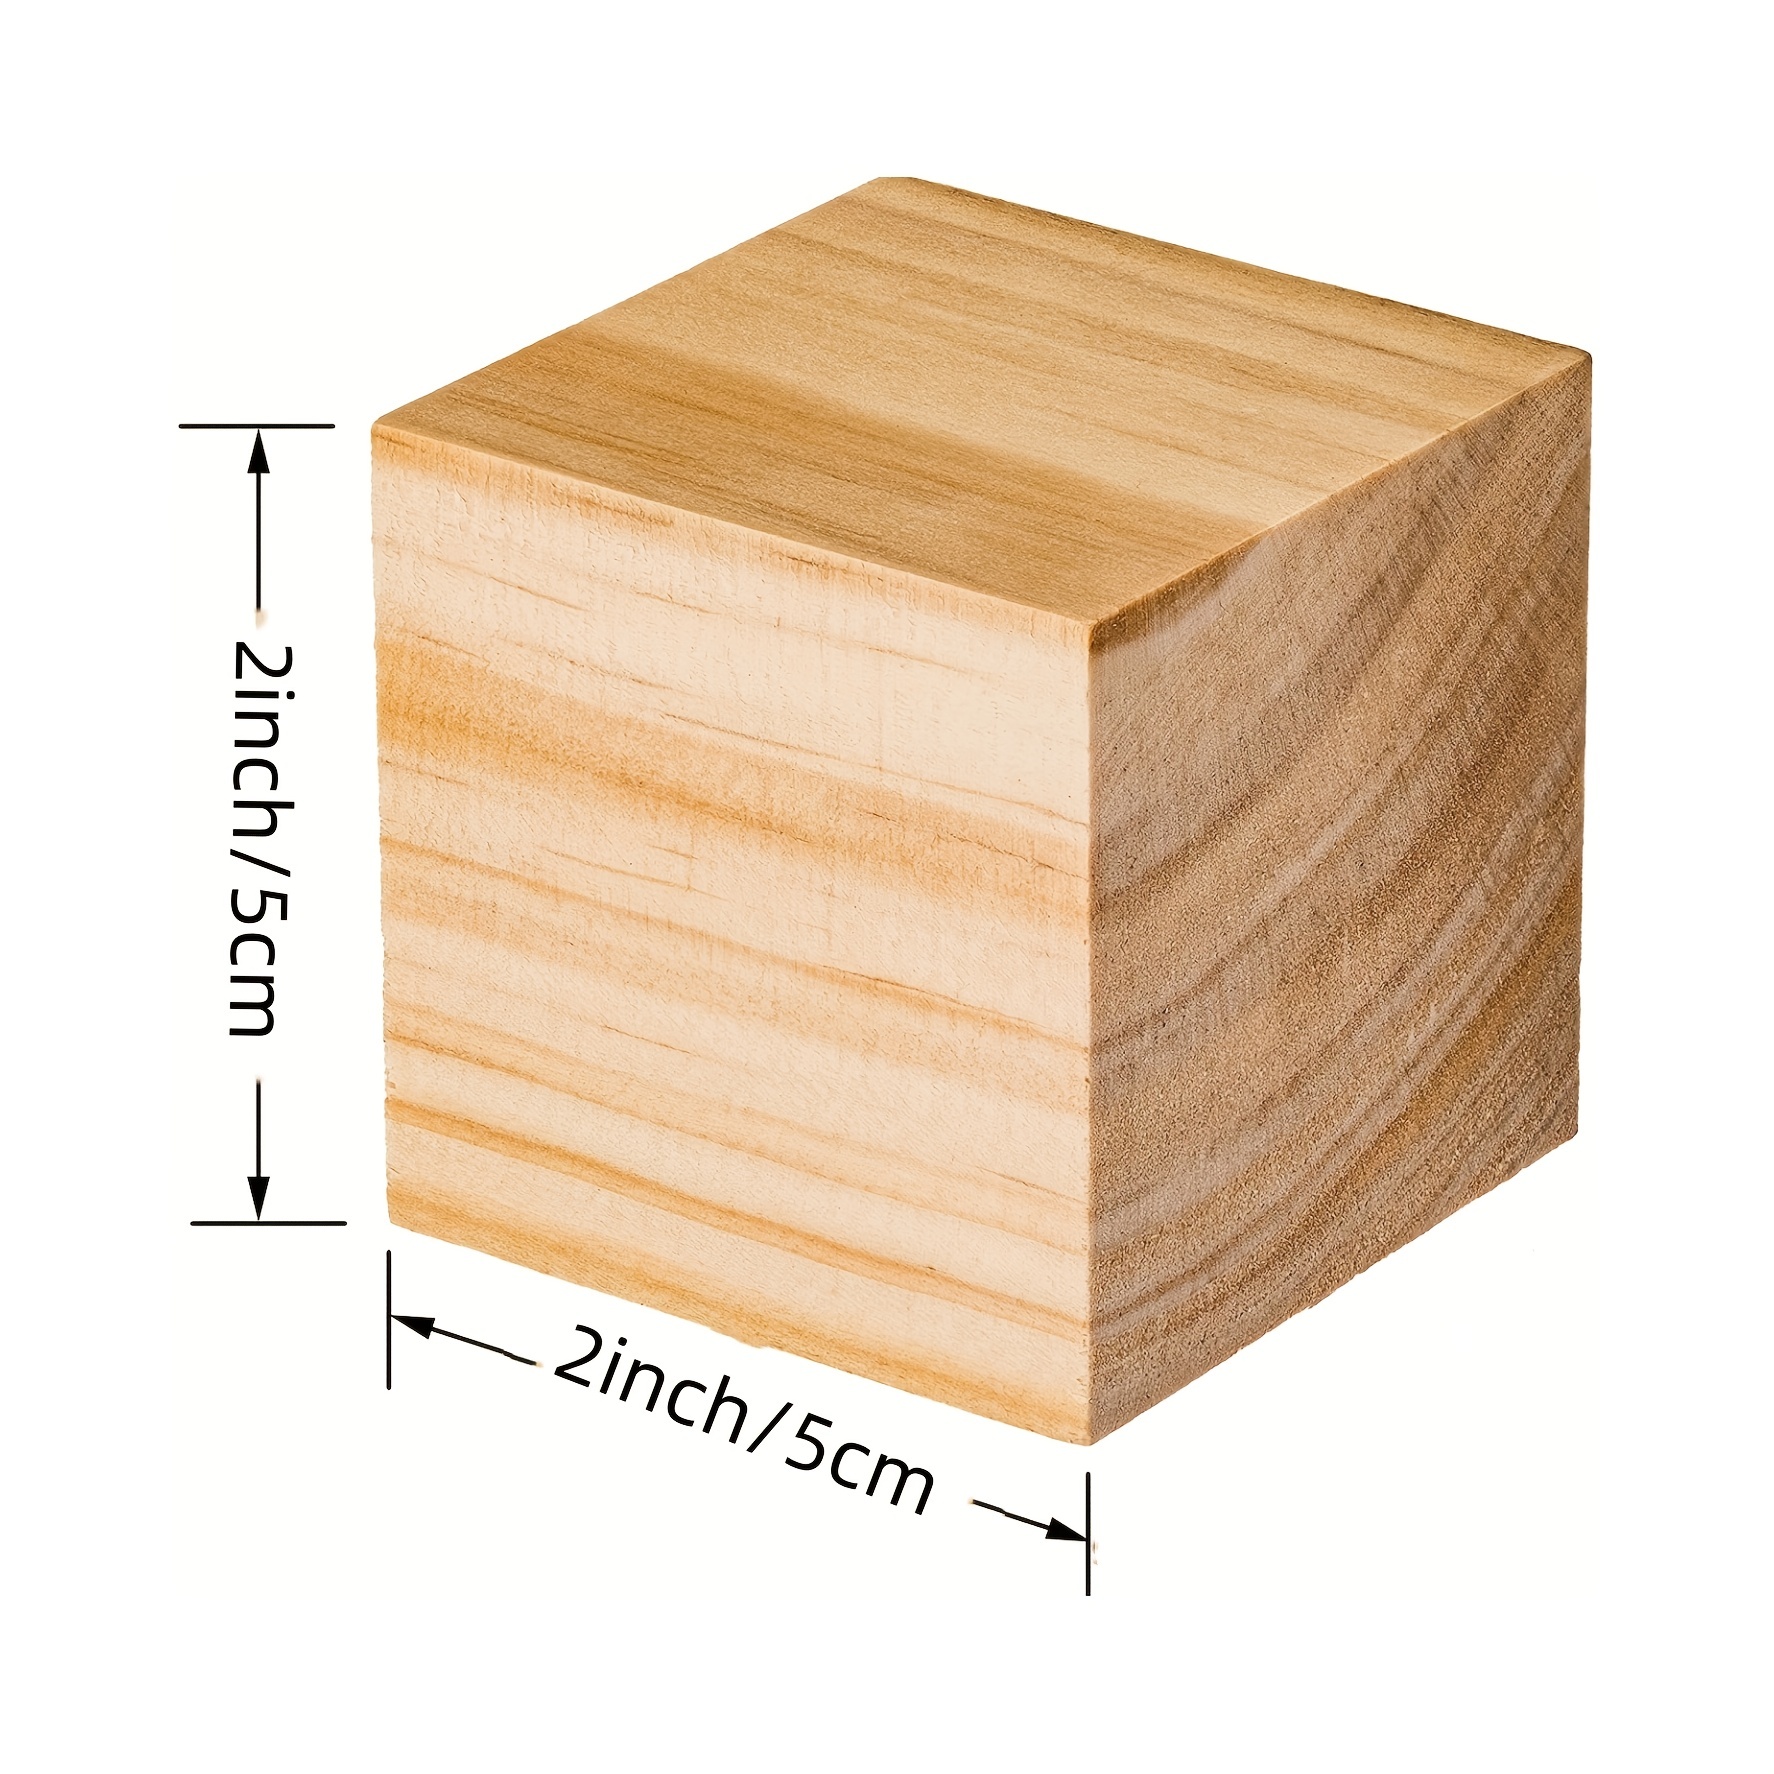 Tosnail Paquete de 30 cubos de madera sin terminar de 2 pulgadas, bloques  de madera, ideales para hacer manualidades